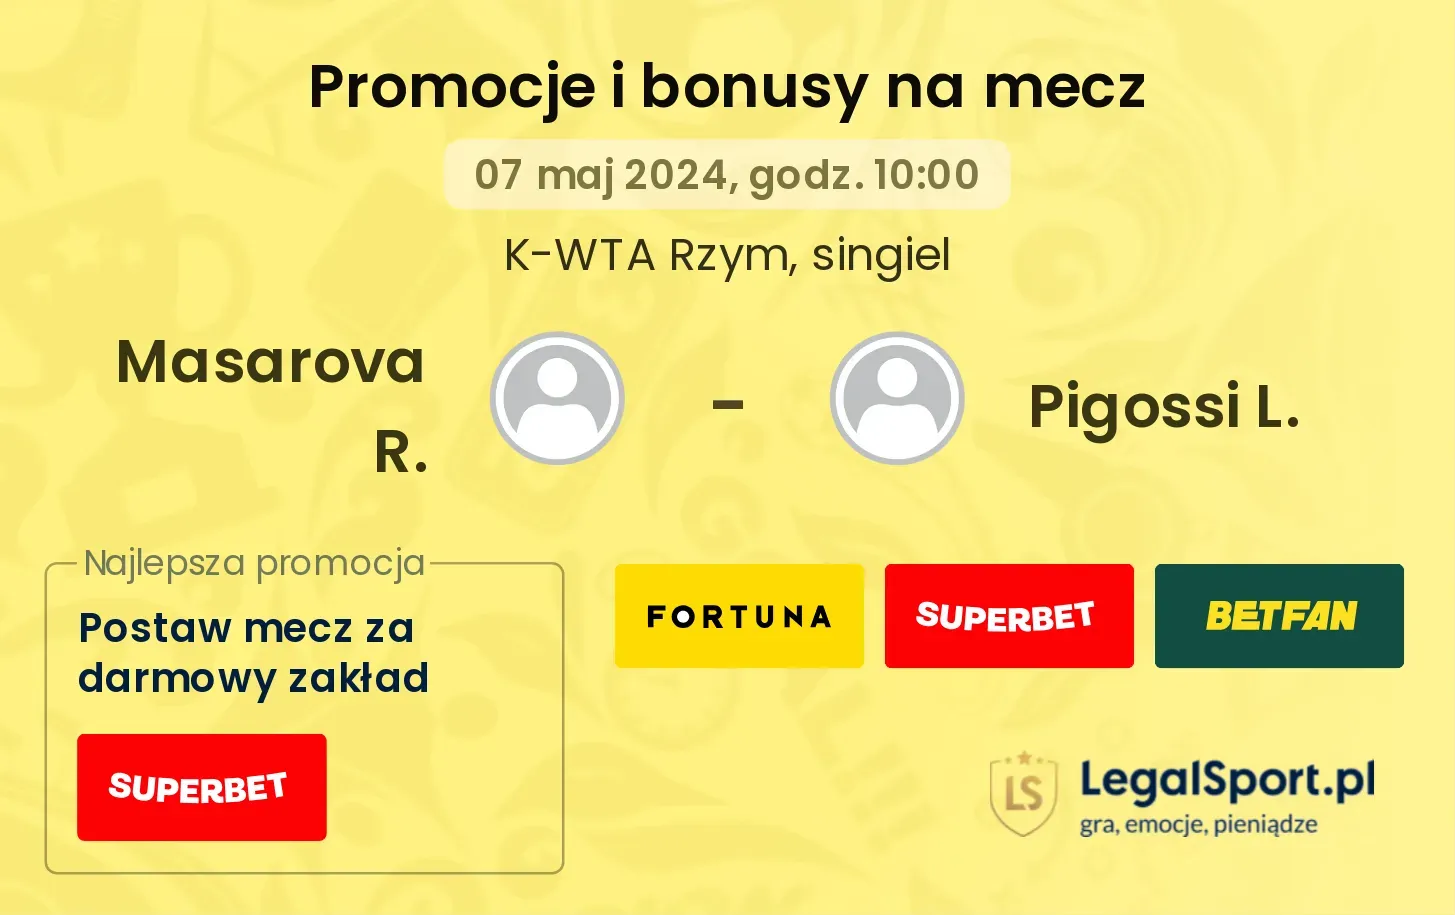 Masarova R. - Pigossi L. promocje bonusy na mecz